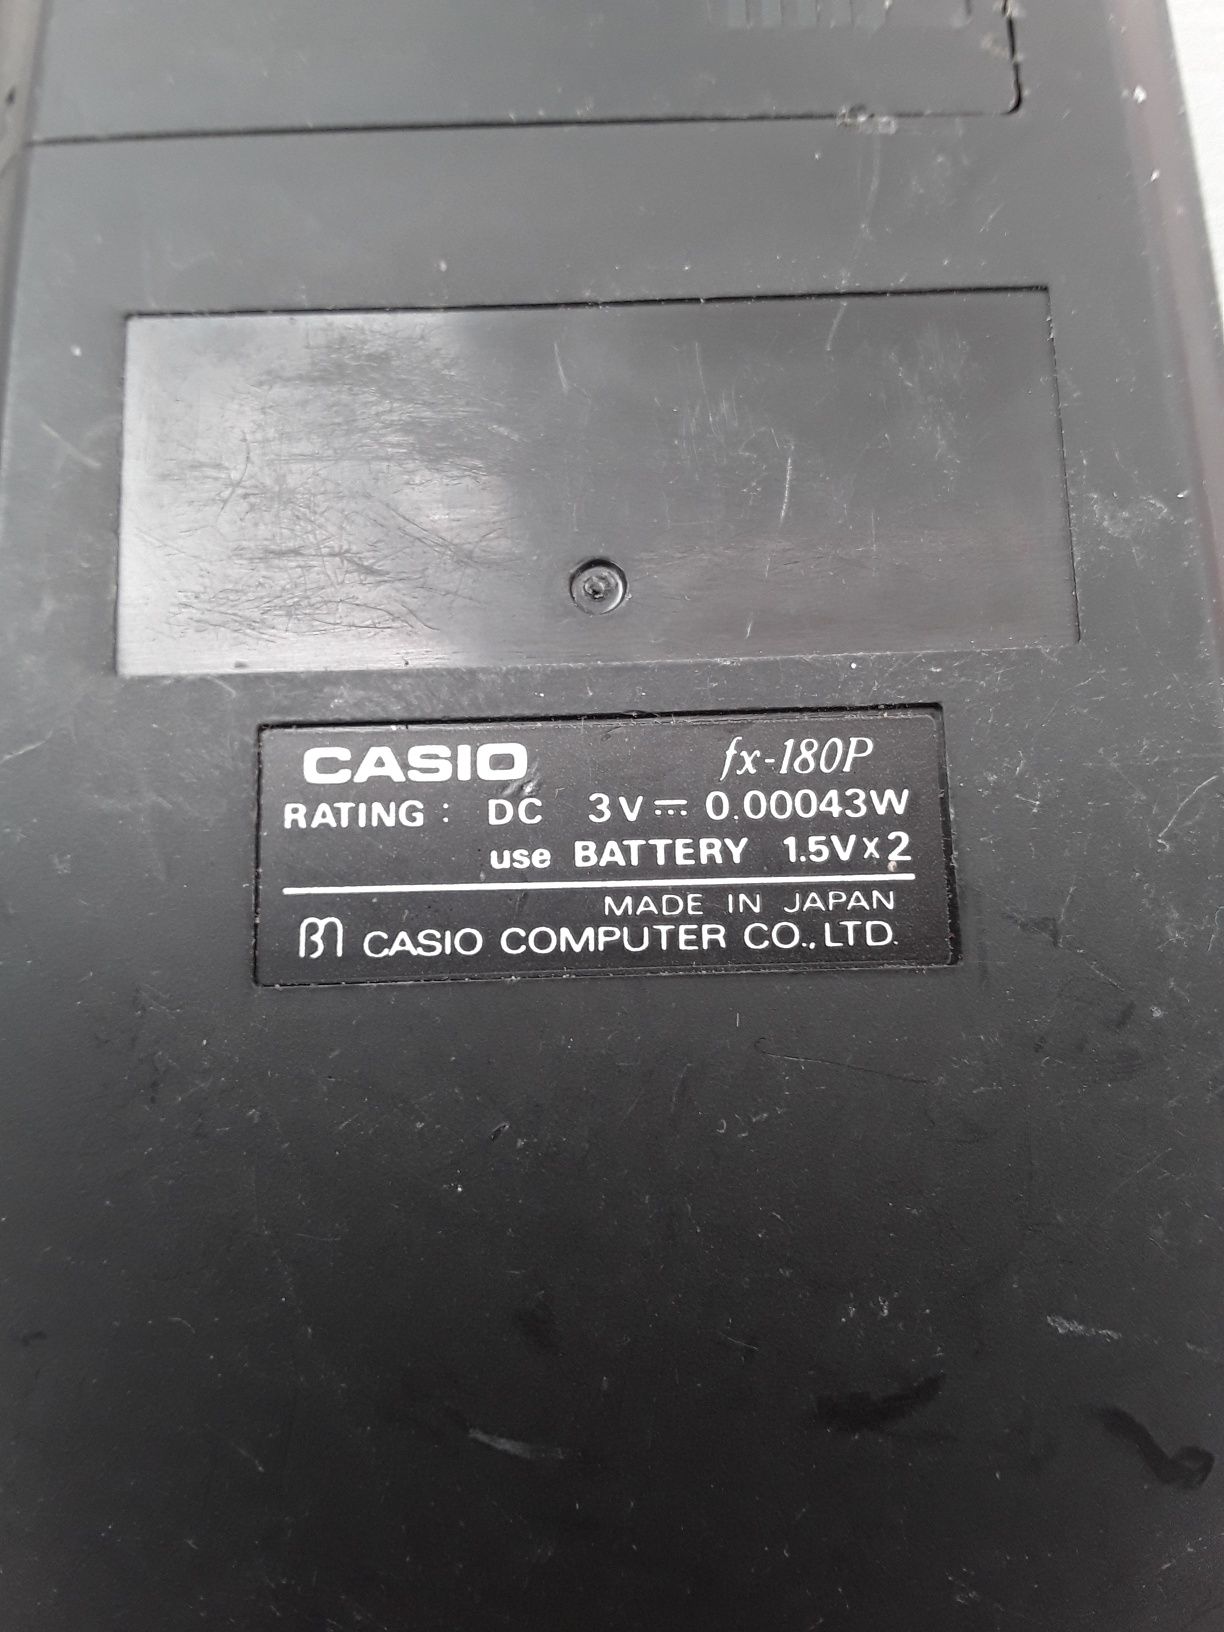 Calculator științific Casio Texas Instruments